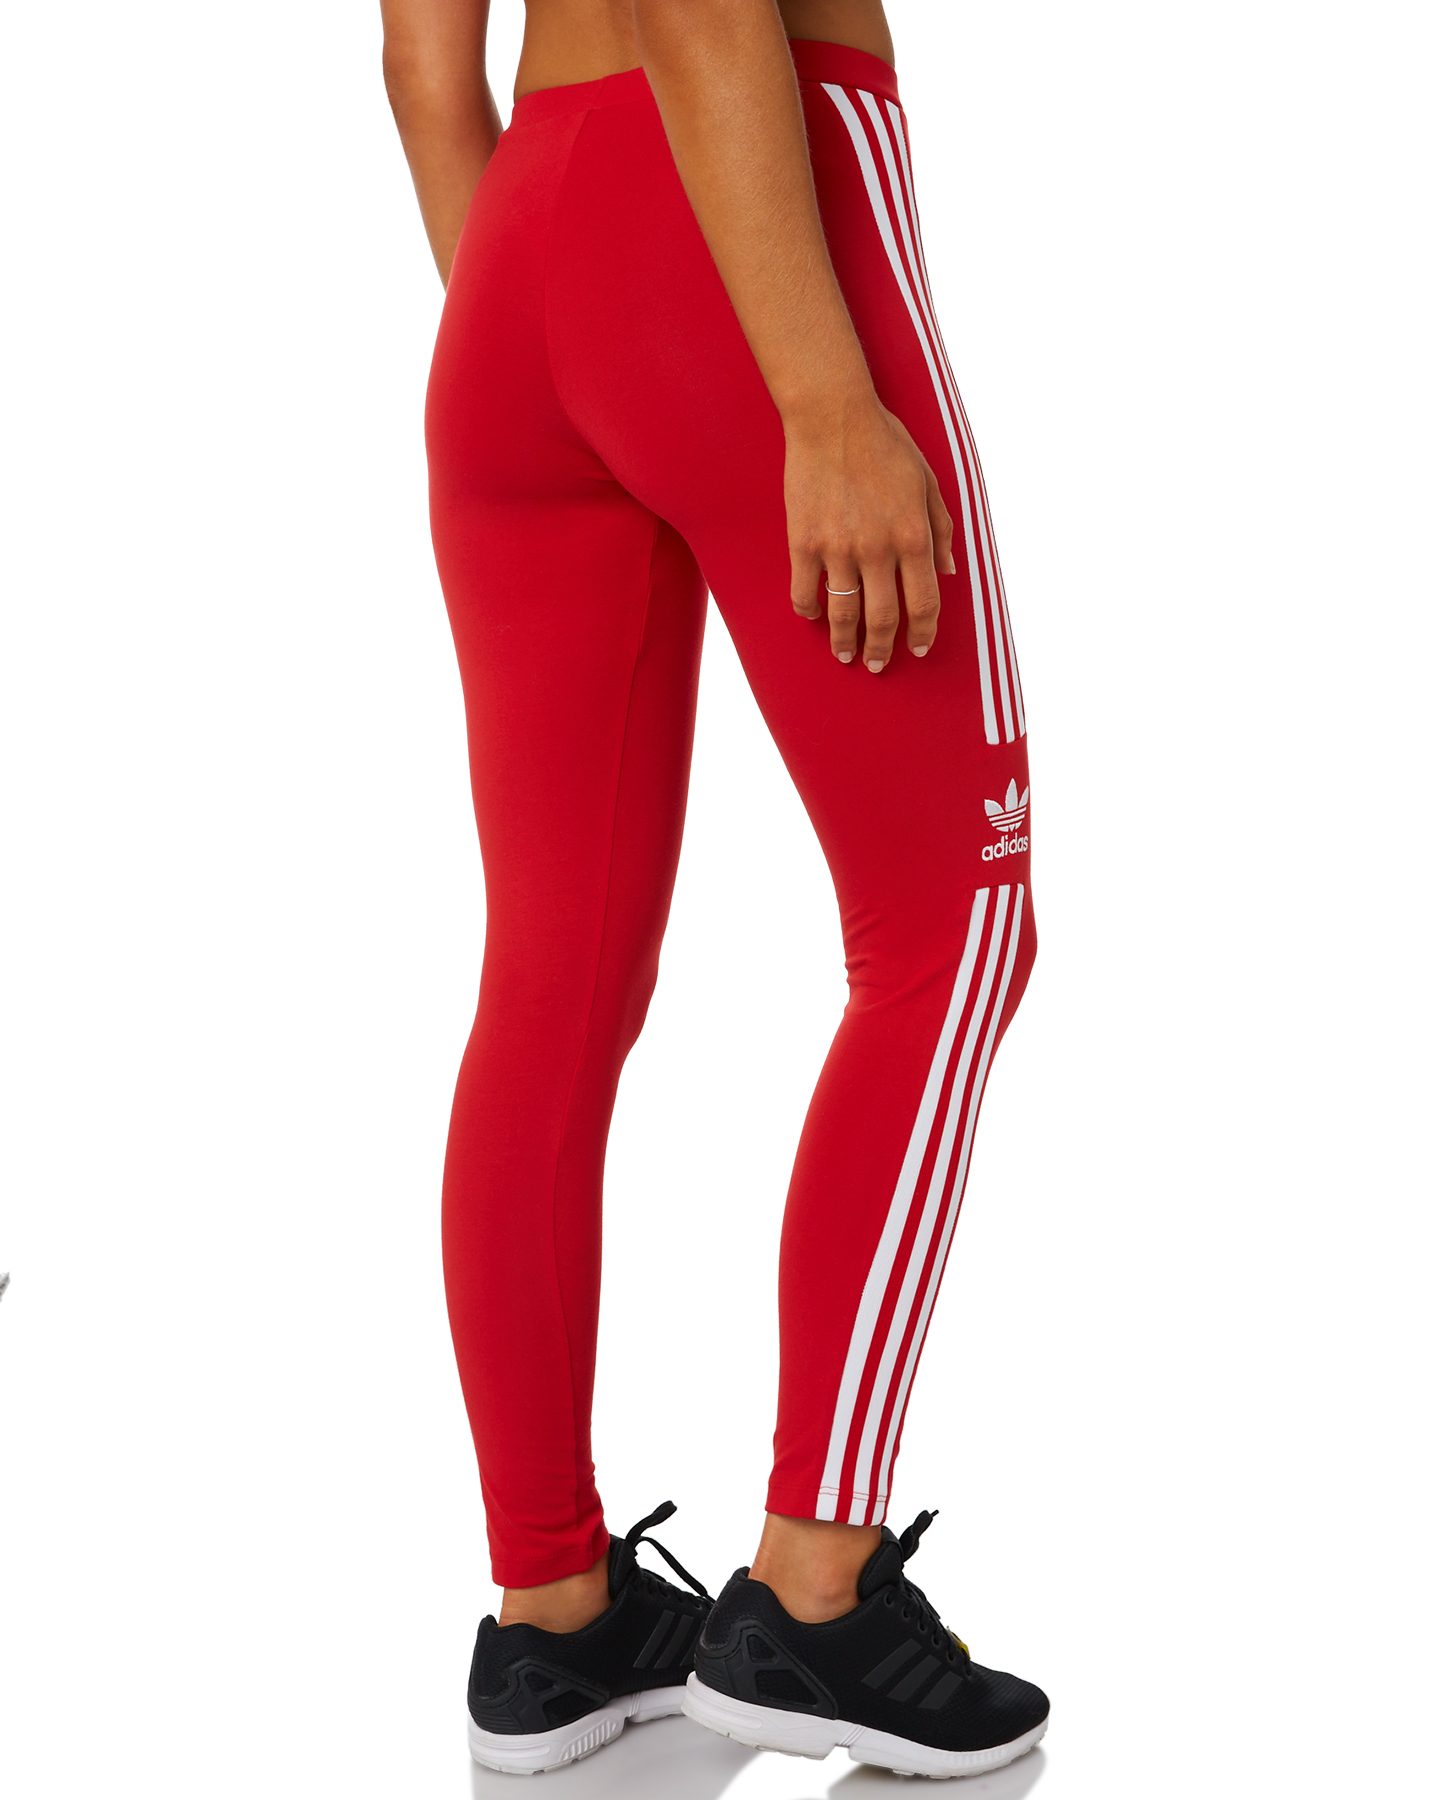 Adidas Trefoil Tight - Scarlet Red | SurfStitch